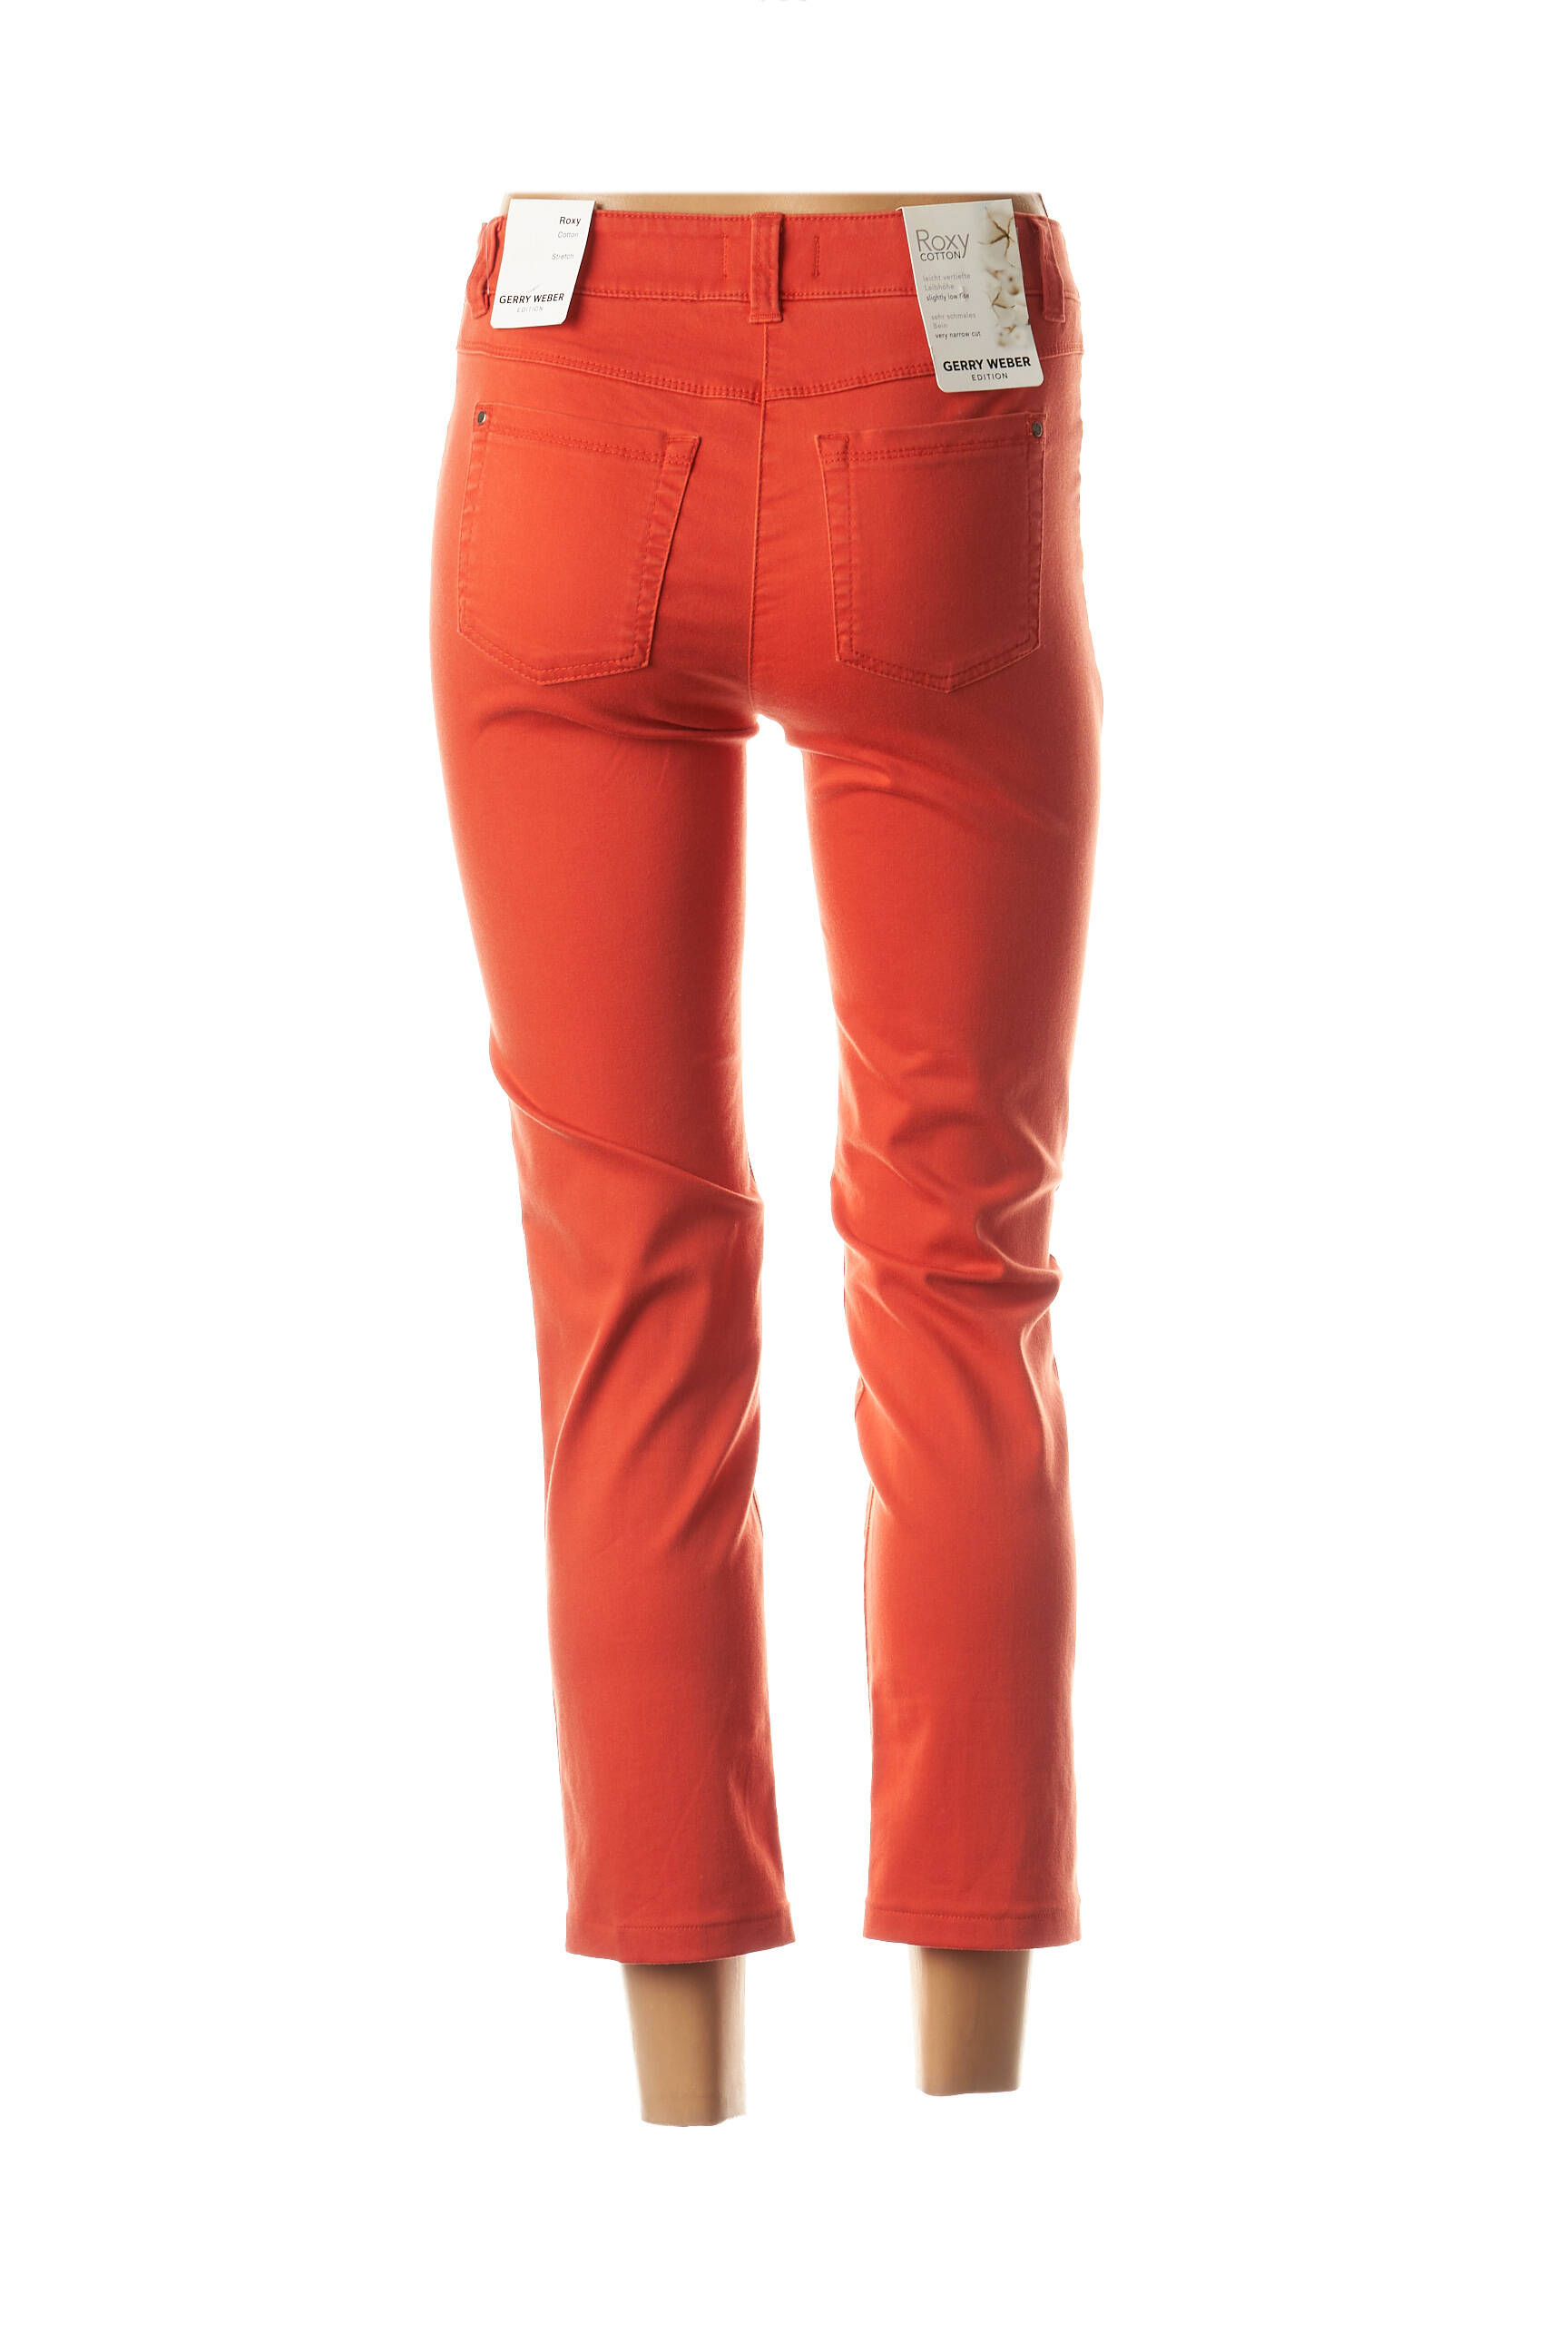 Gerry Weber Pantalon7 8 Femme Couleur Orange En Destockage 1778073-orange - Modz